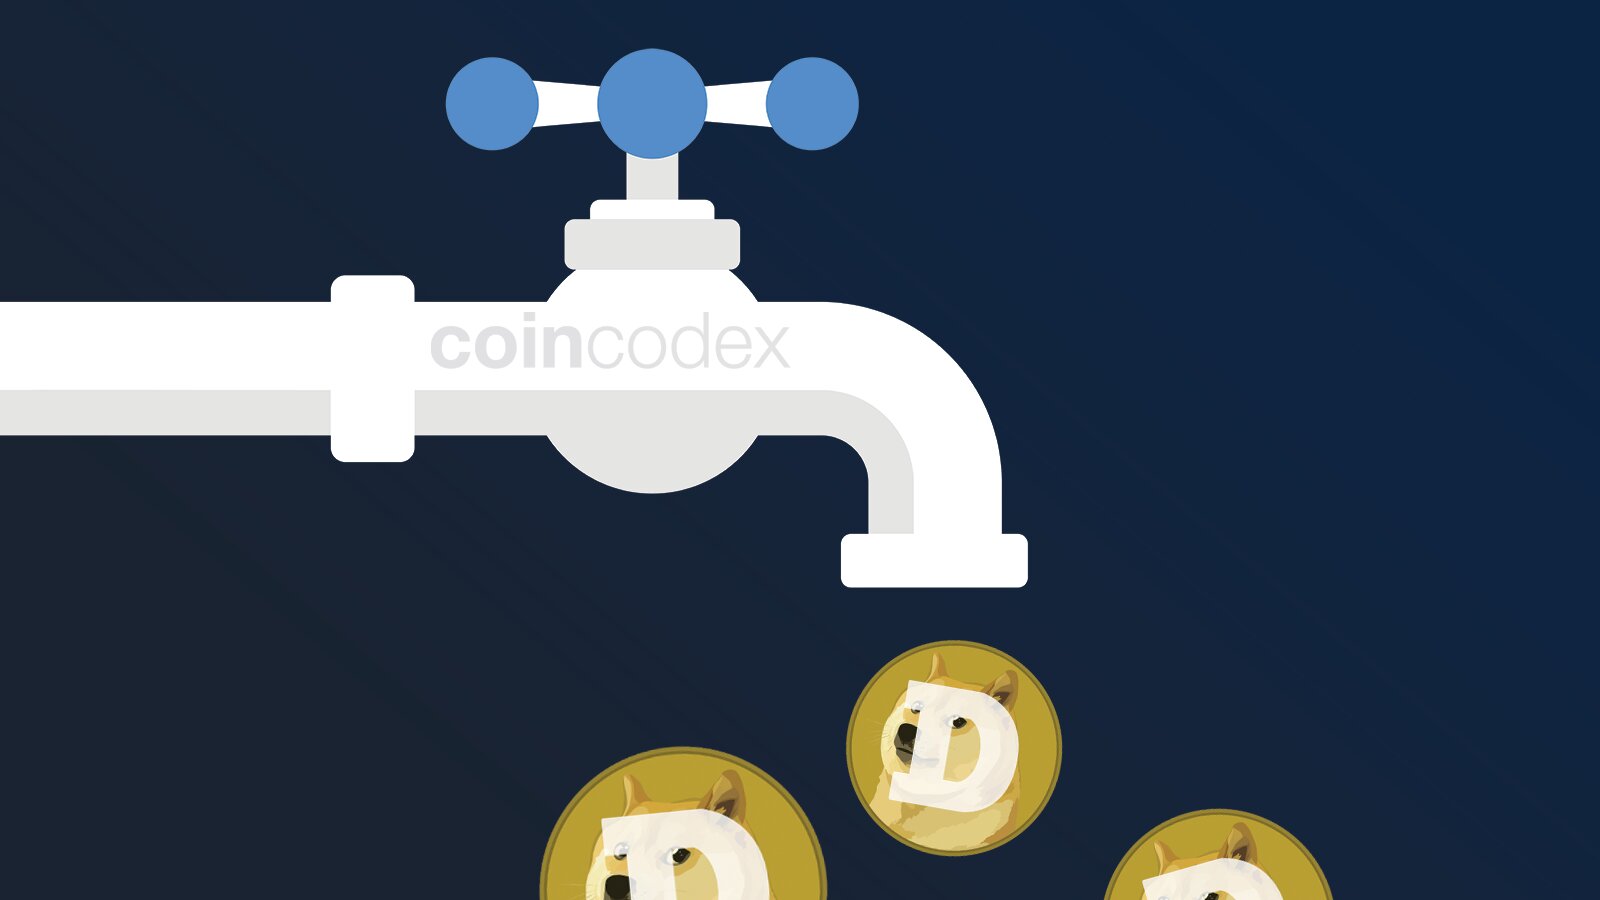 Dogecoin Faucet List: Best Ways to Earn Dogecoin - Coindoo